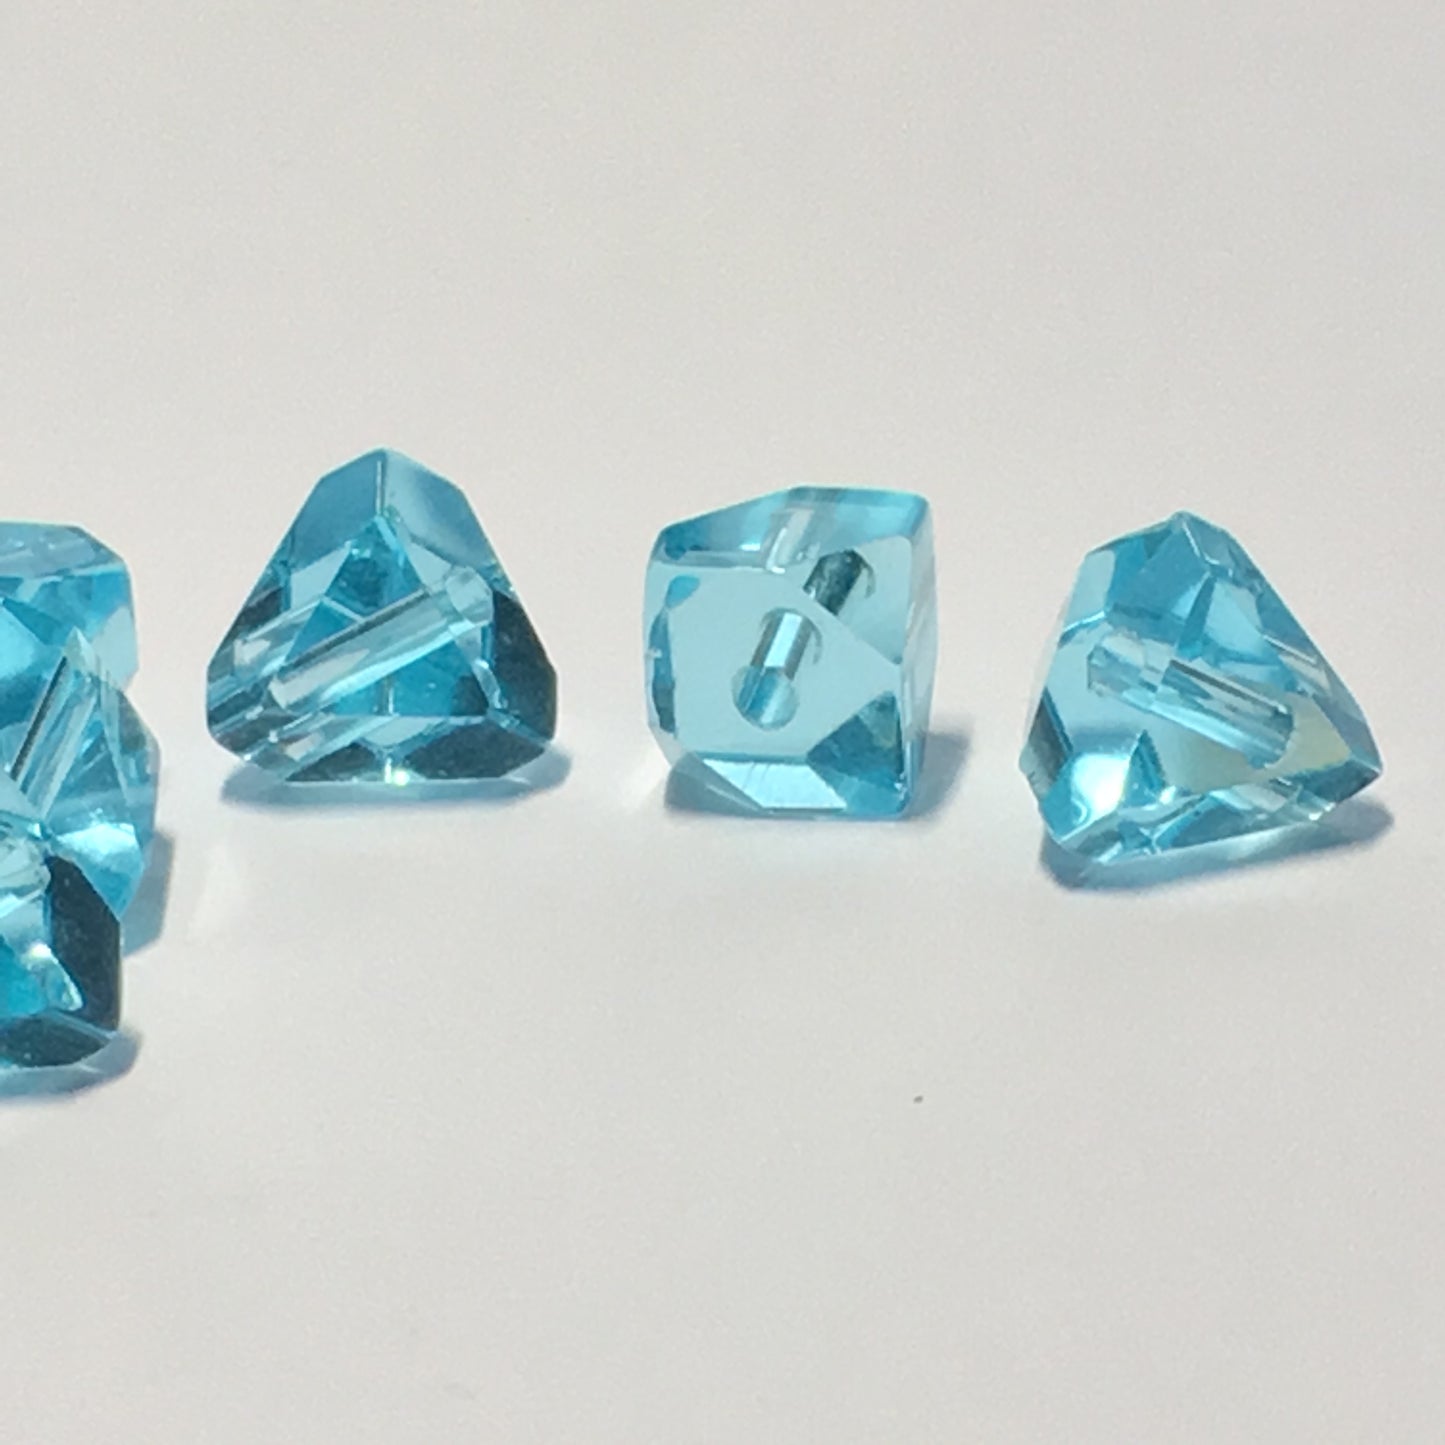 Transparent Light Blue Glass Opposing Cornerless Cube Beads, 6 mm, 6 Beads